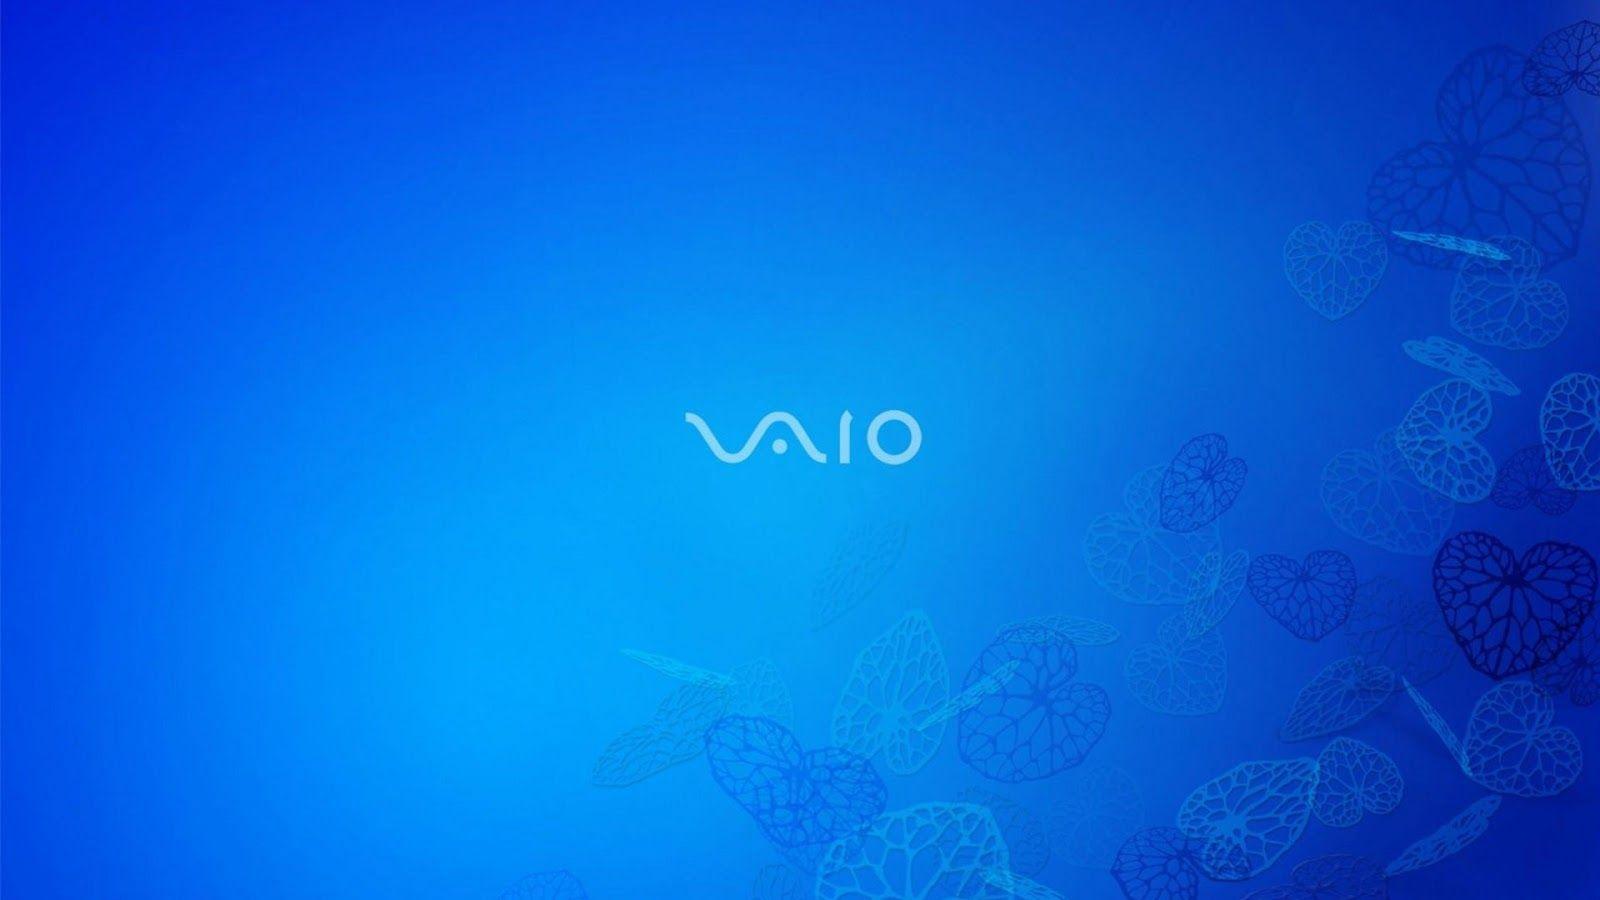 Sony Vaio HD wallpaper